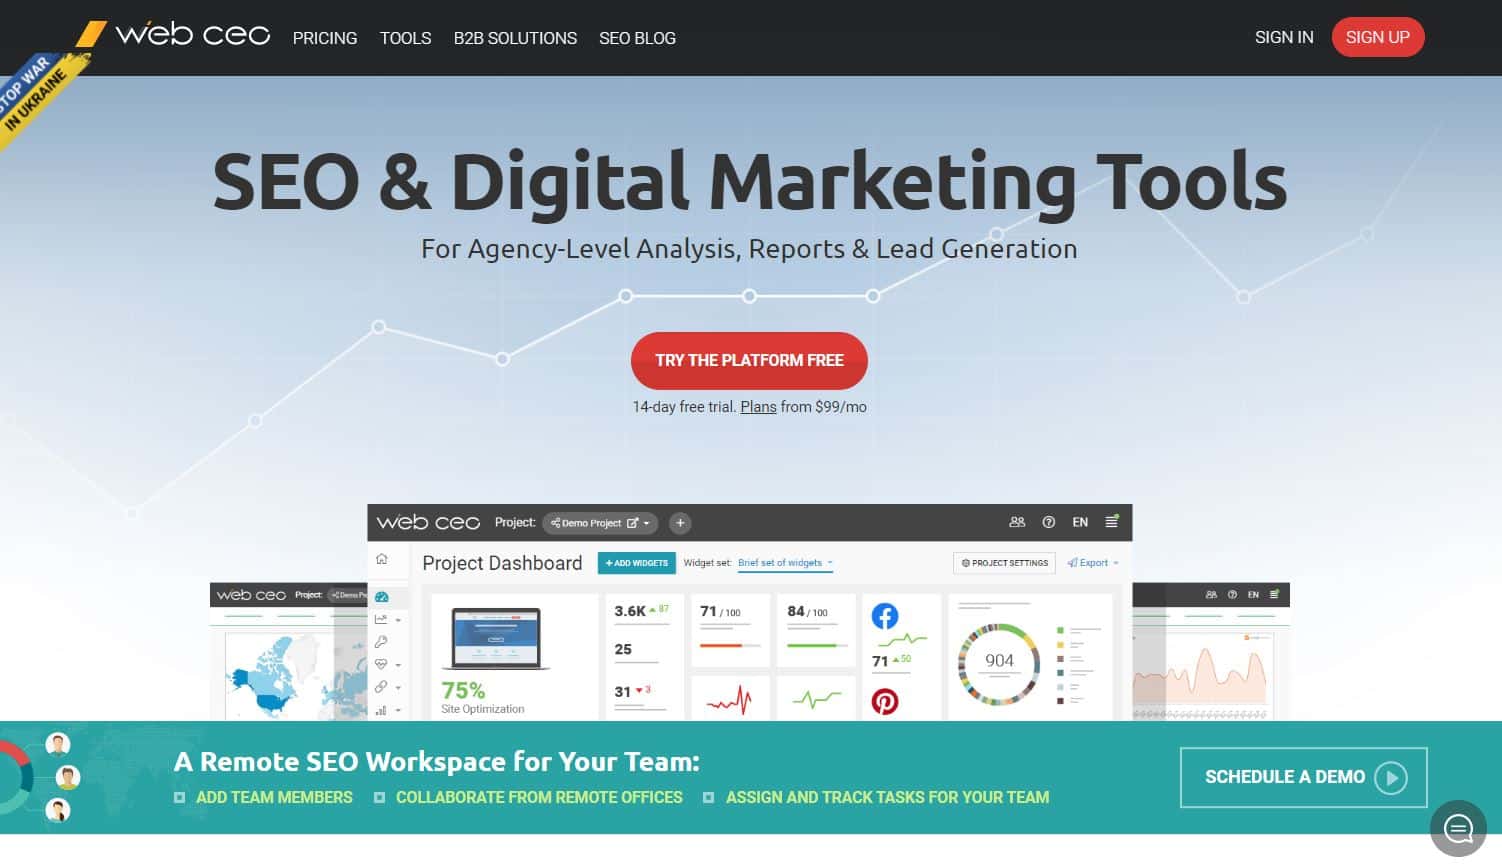 WebCEO-hjemmesiden med overskriften "SEO & Digital Marketing Tools".